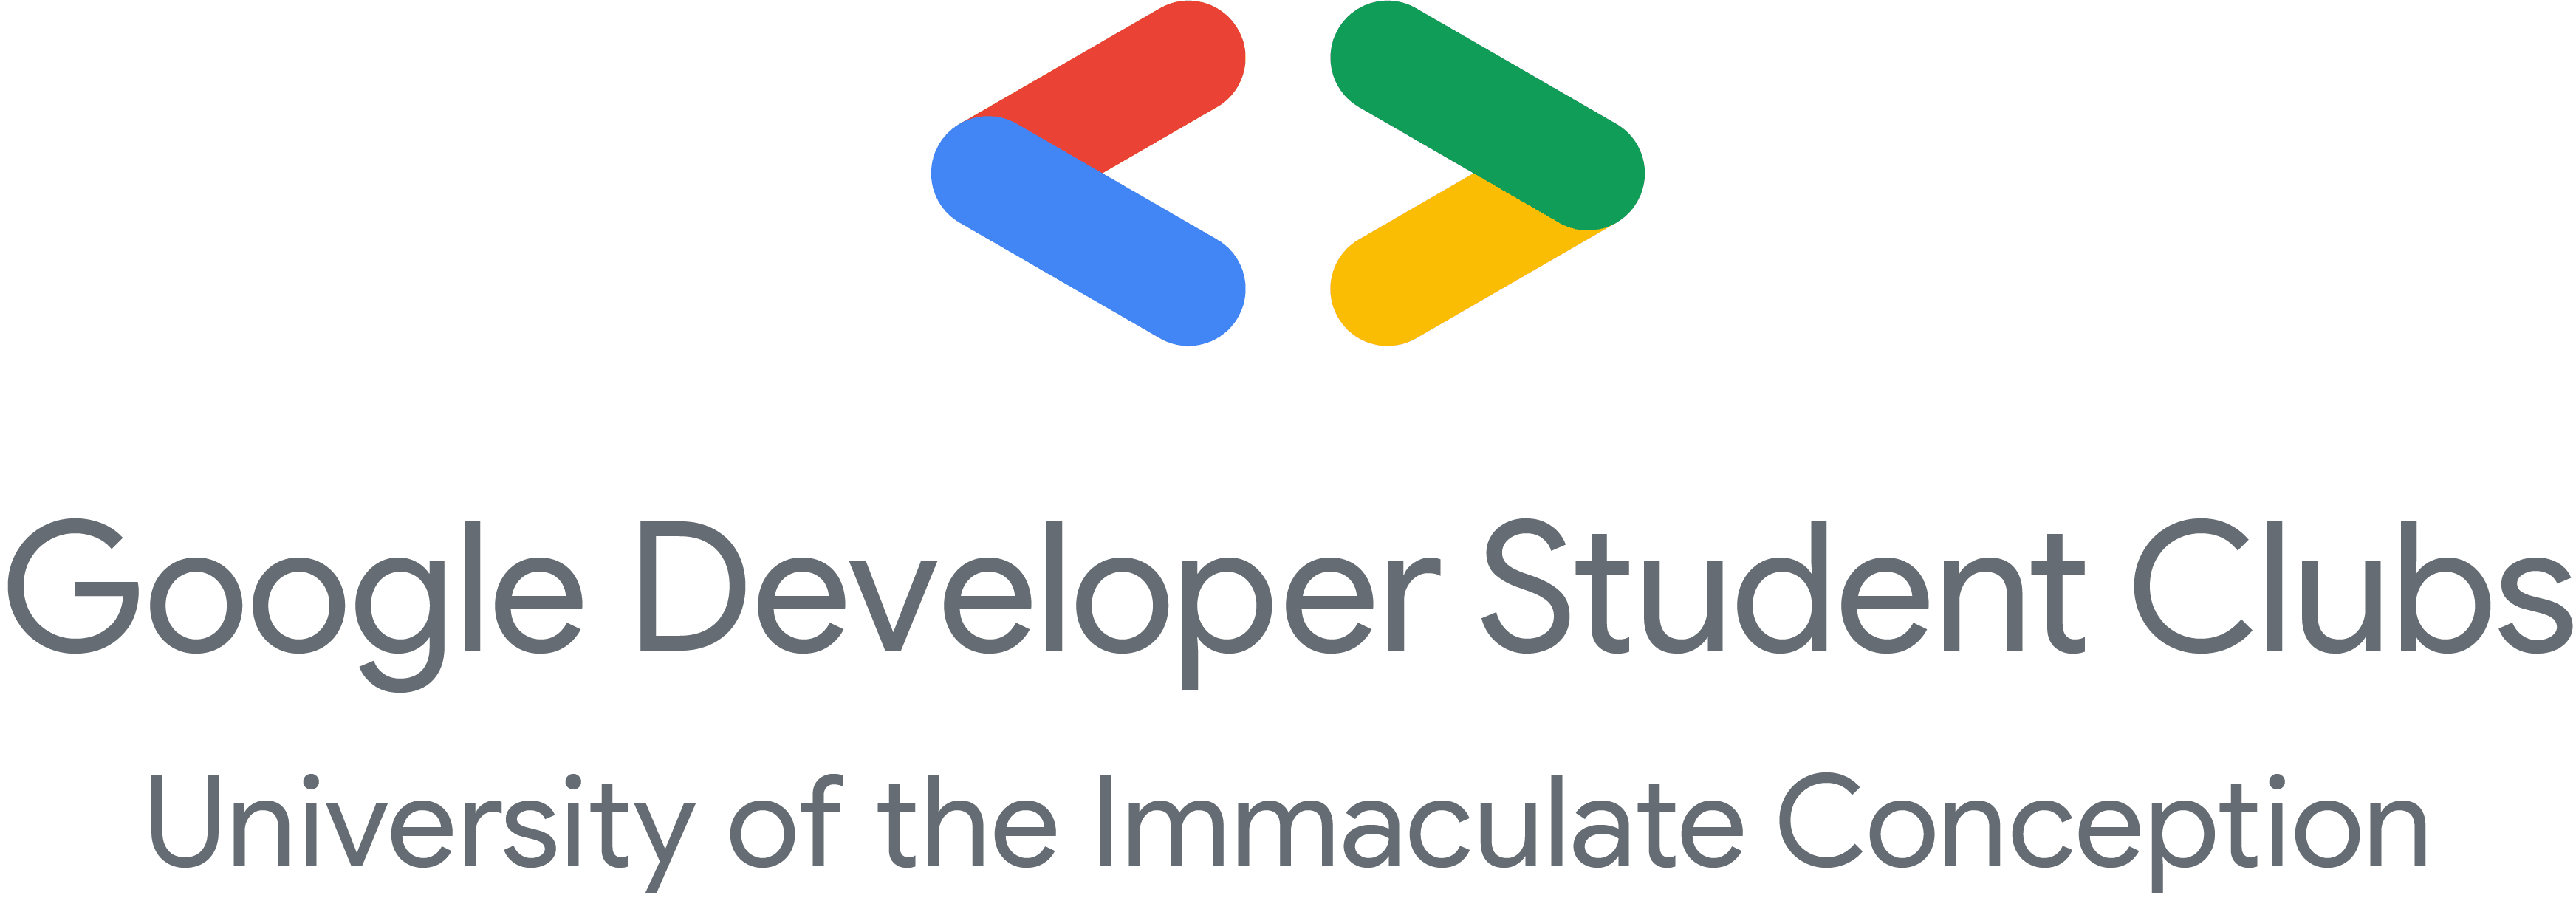 Google Developer Student Clubs of UIC logo